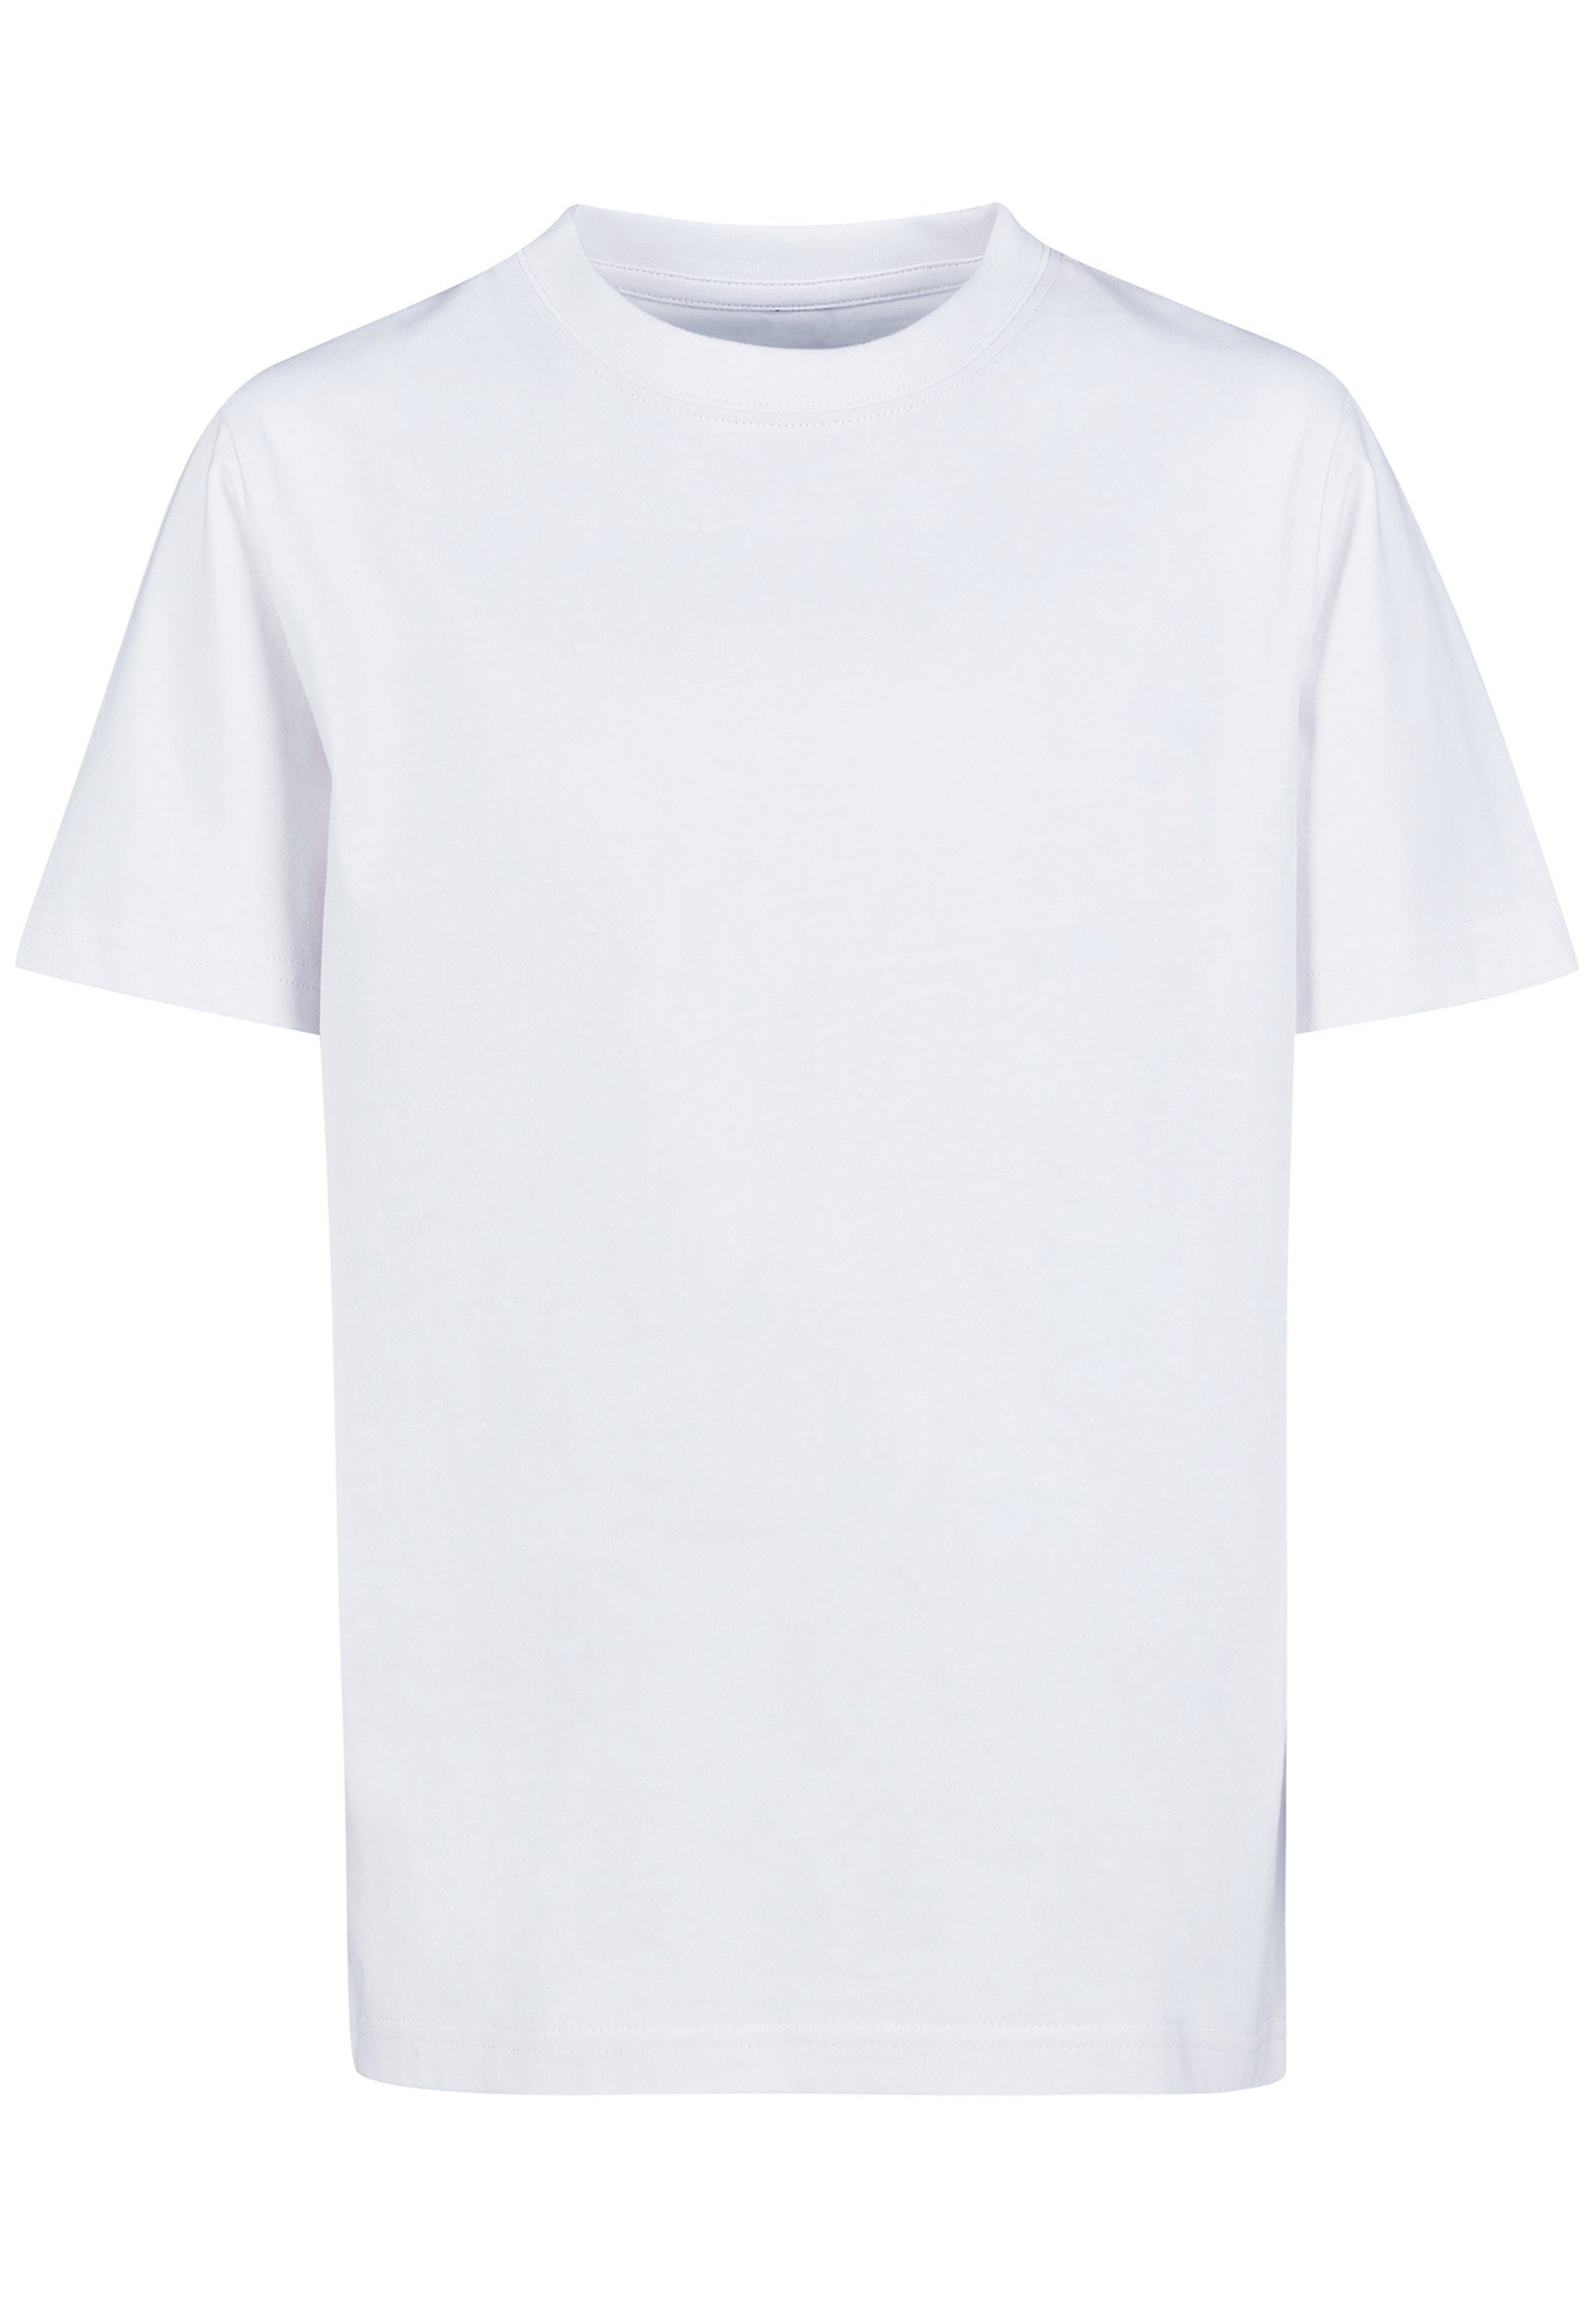 F4NT4STIC T-Shirt Schmetterling UNISEX TEE Silhouette Print weiß